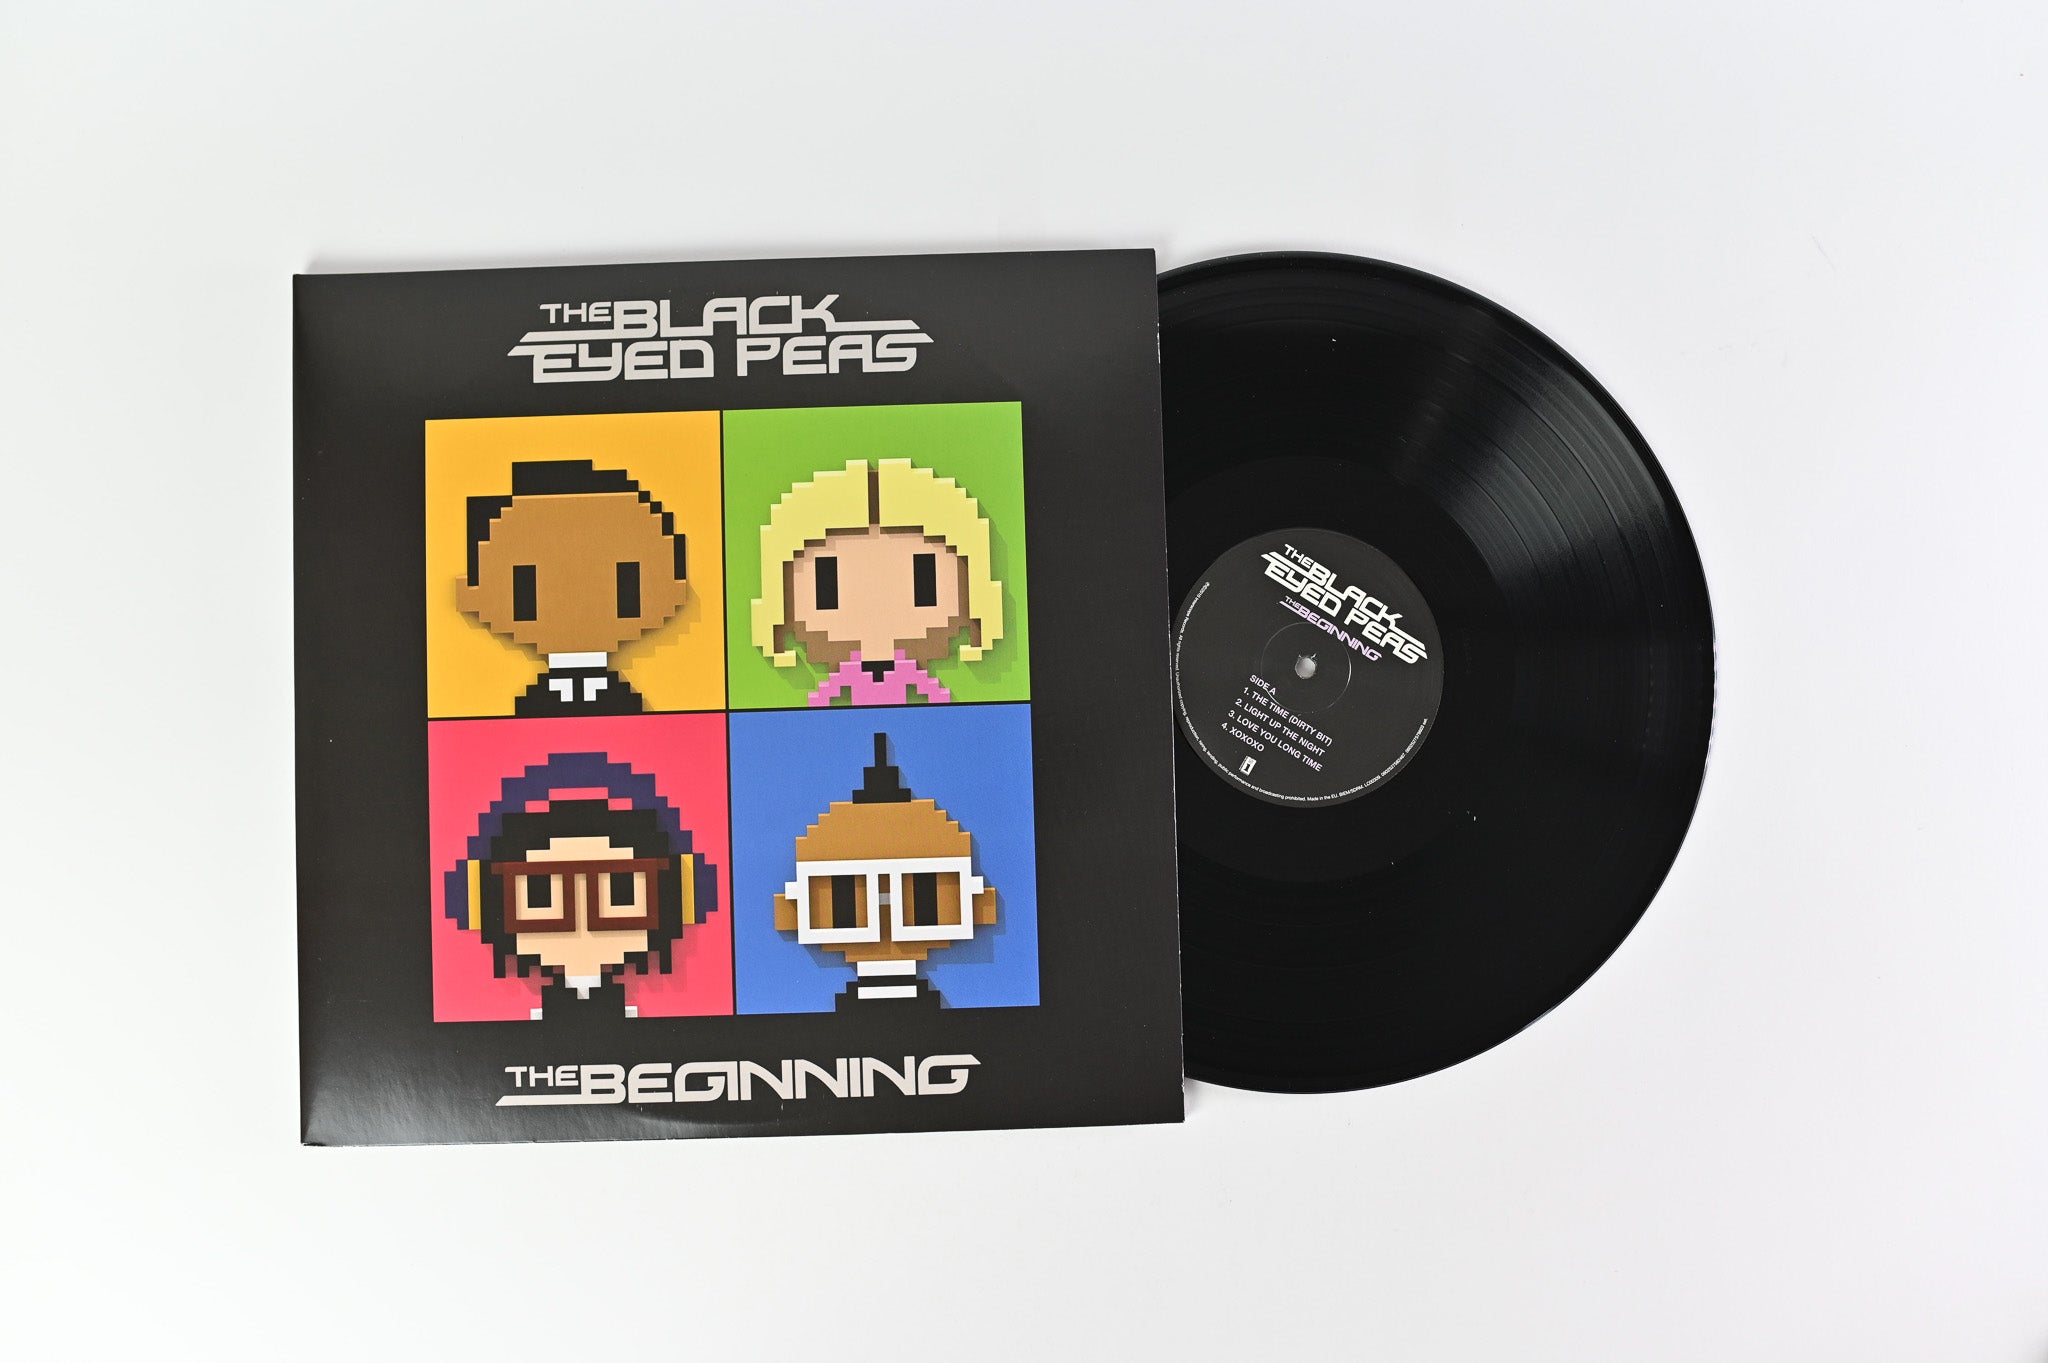 Black Eyed Peas - The Beginning on Interscope Records